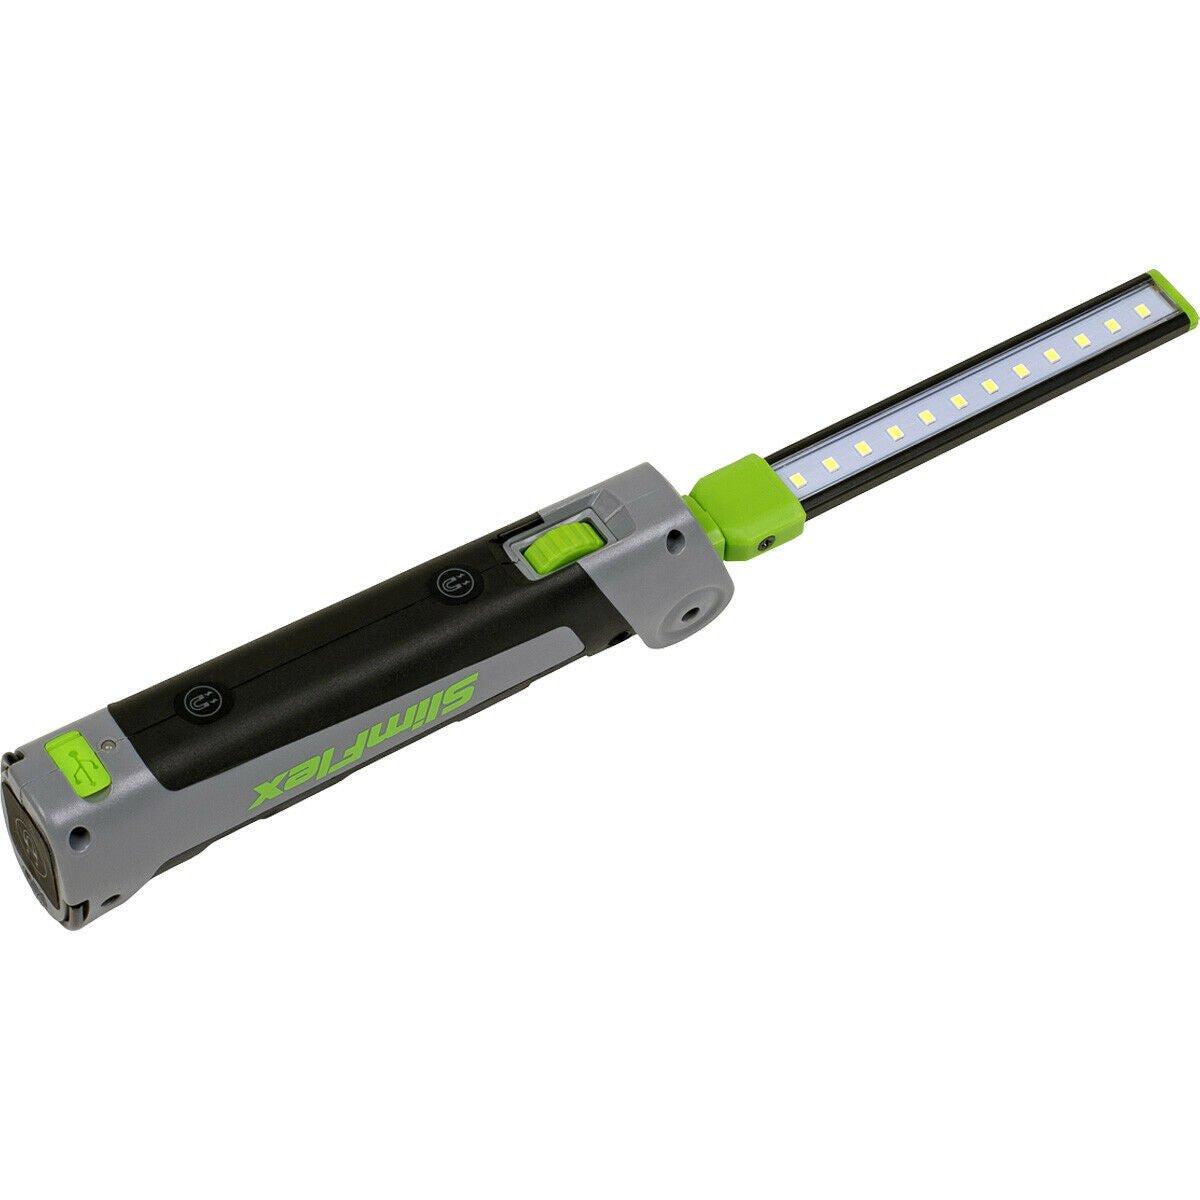 Slimline Inspection Light - 12 SMD + 1W SMD LED - Rechargeable - 400 + 70 Lumens